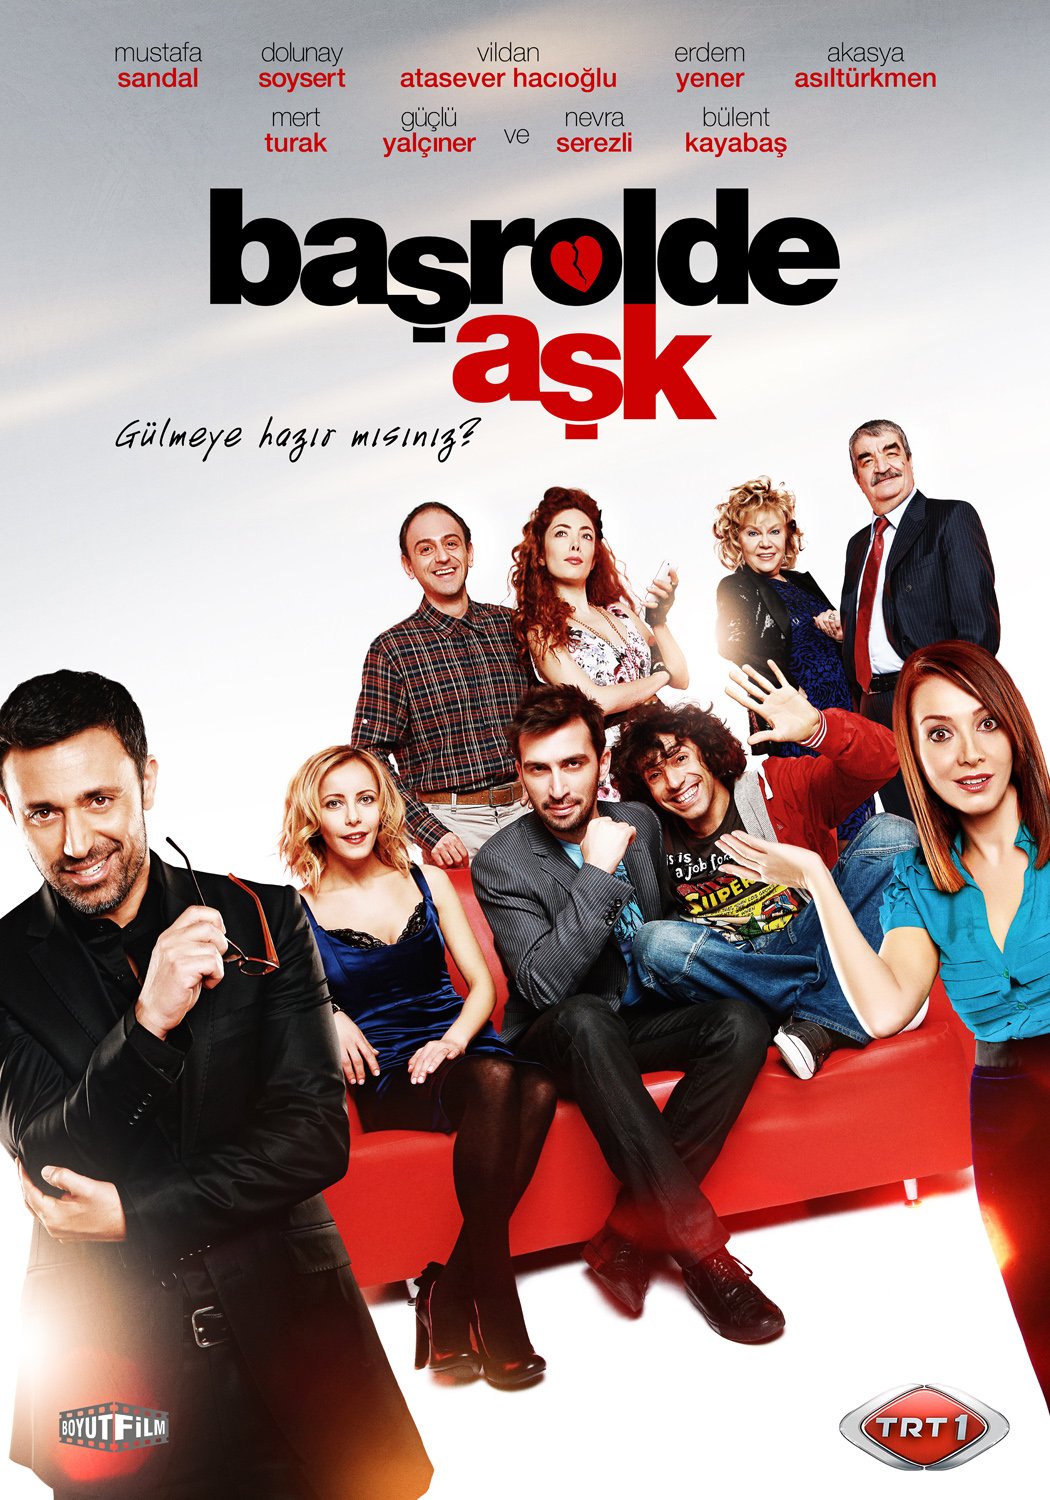 Extra Large TV Poster Image for Başrolde Aşk (#1 of 3)